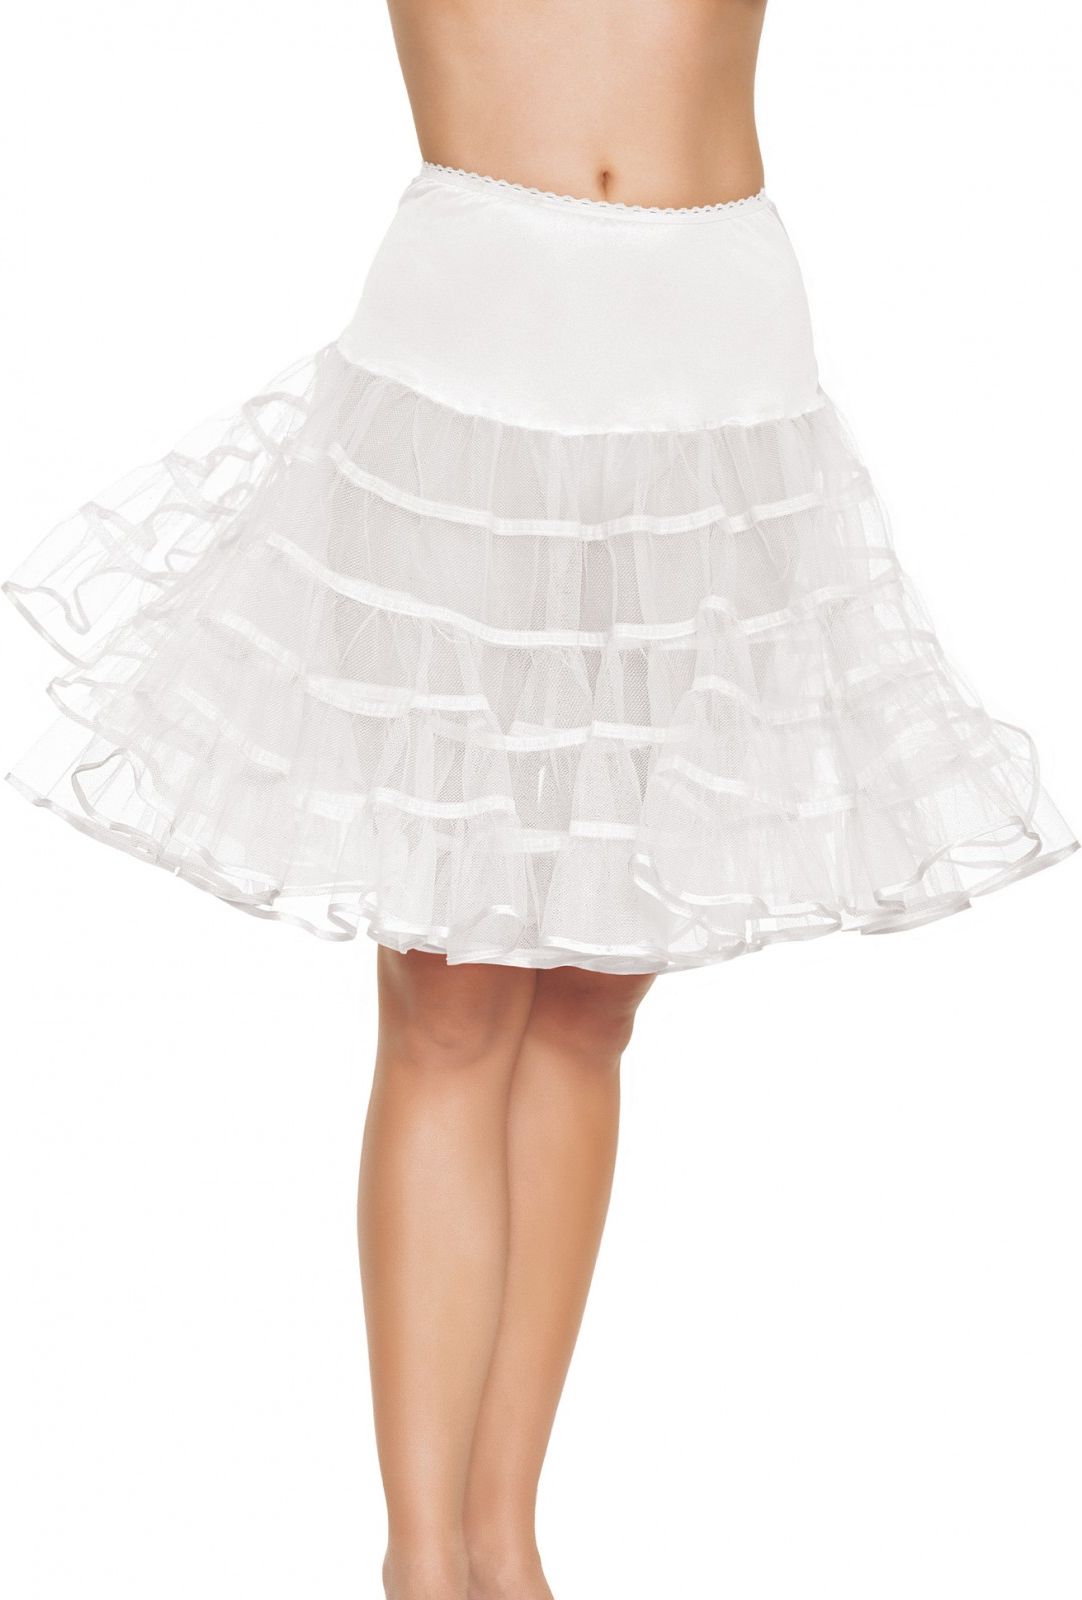 Luxe witte petticoat